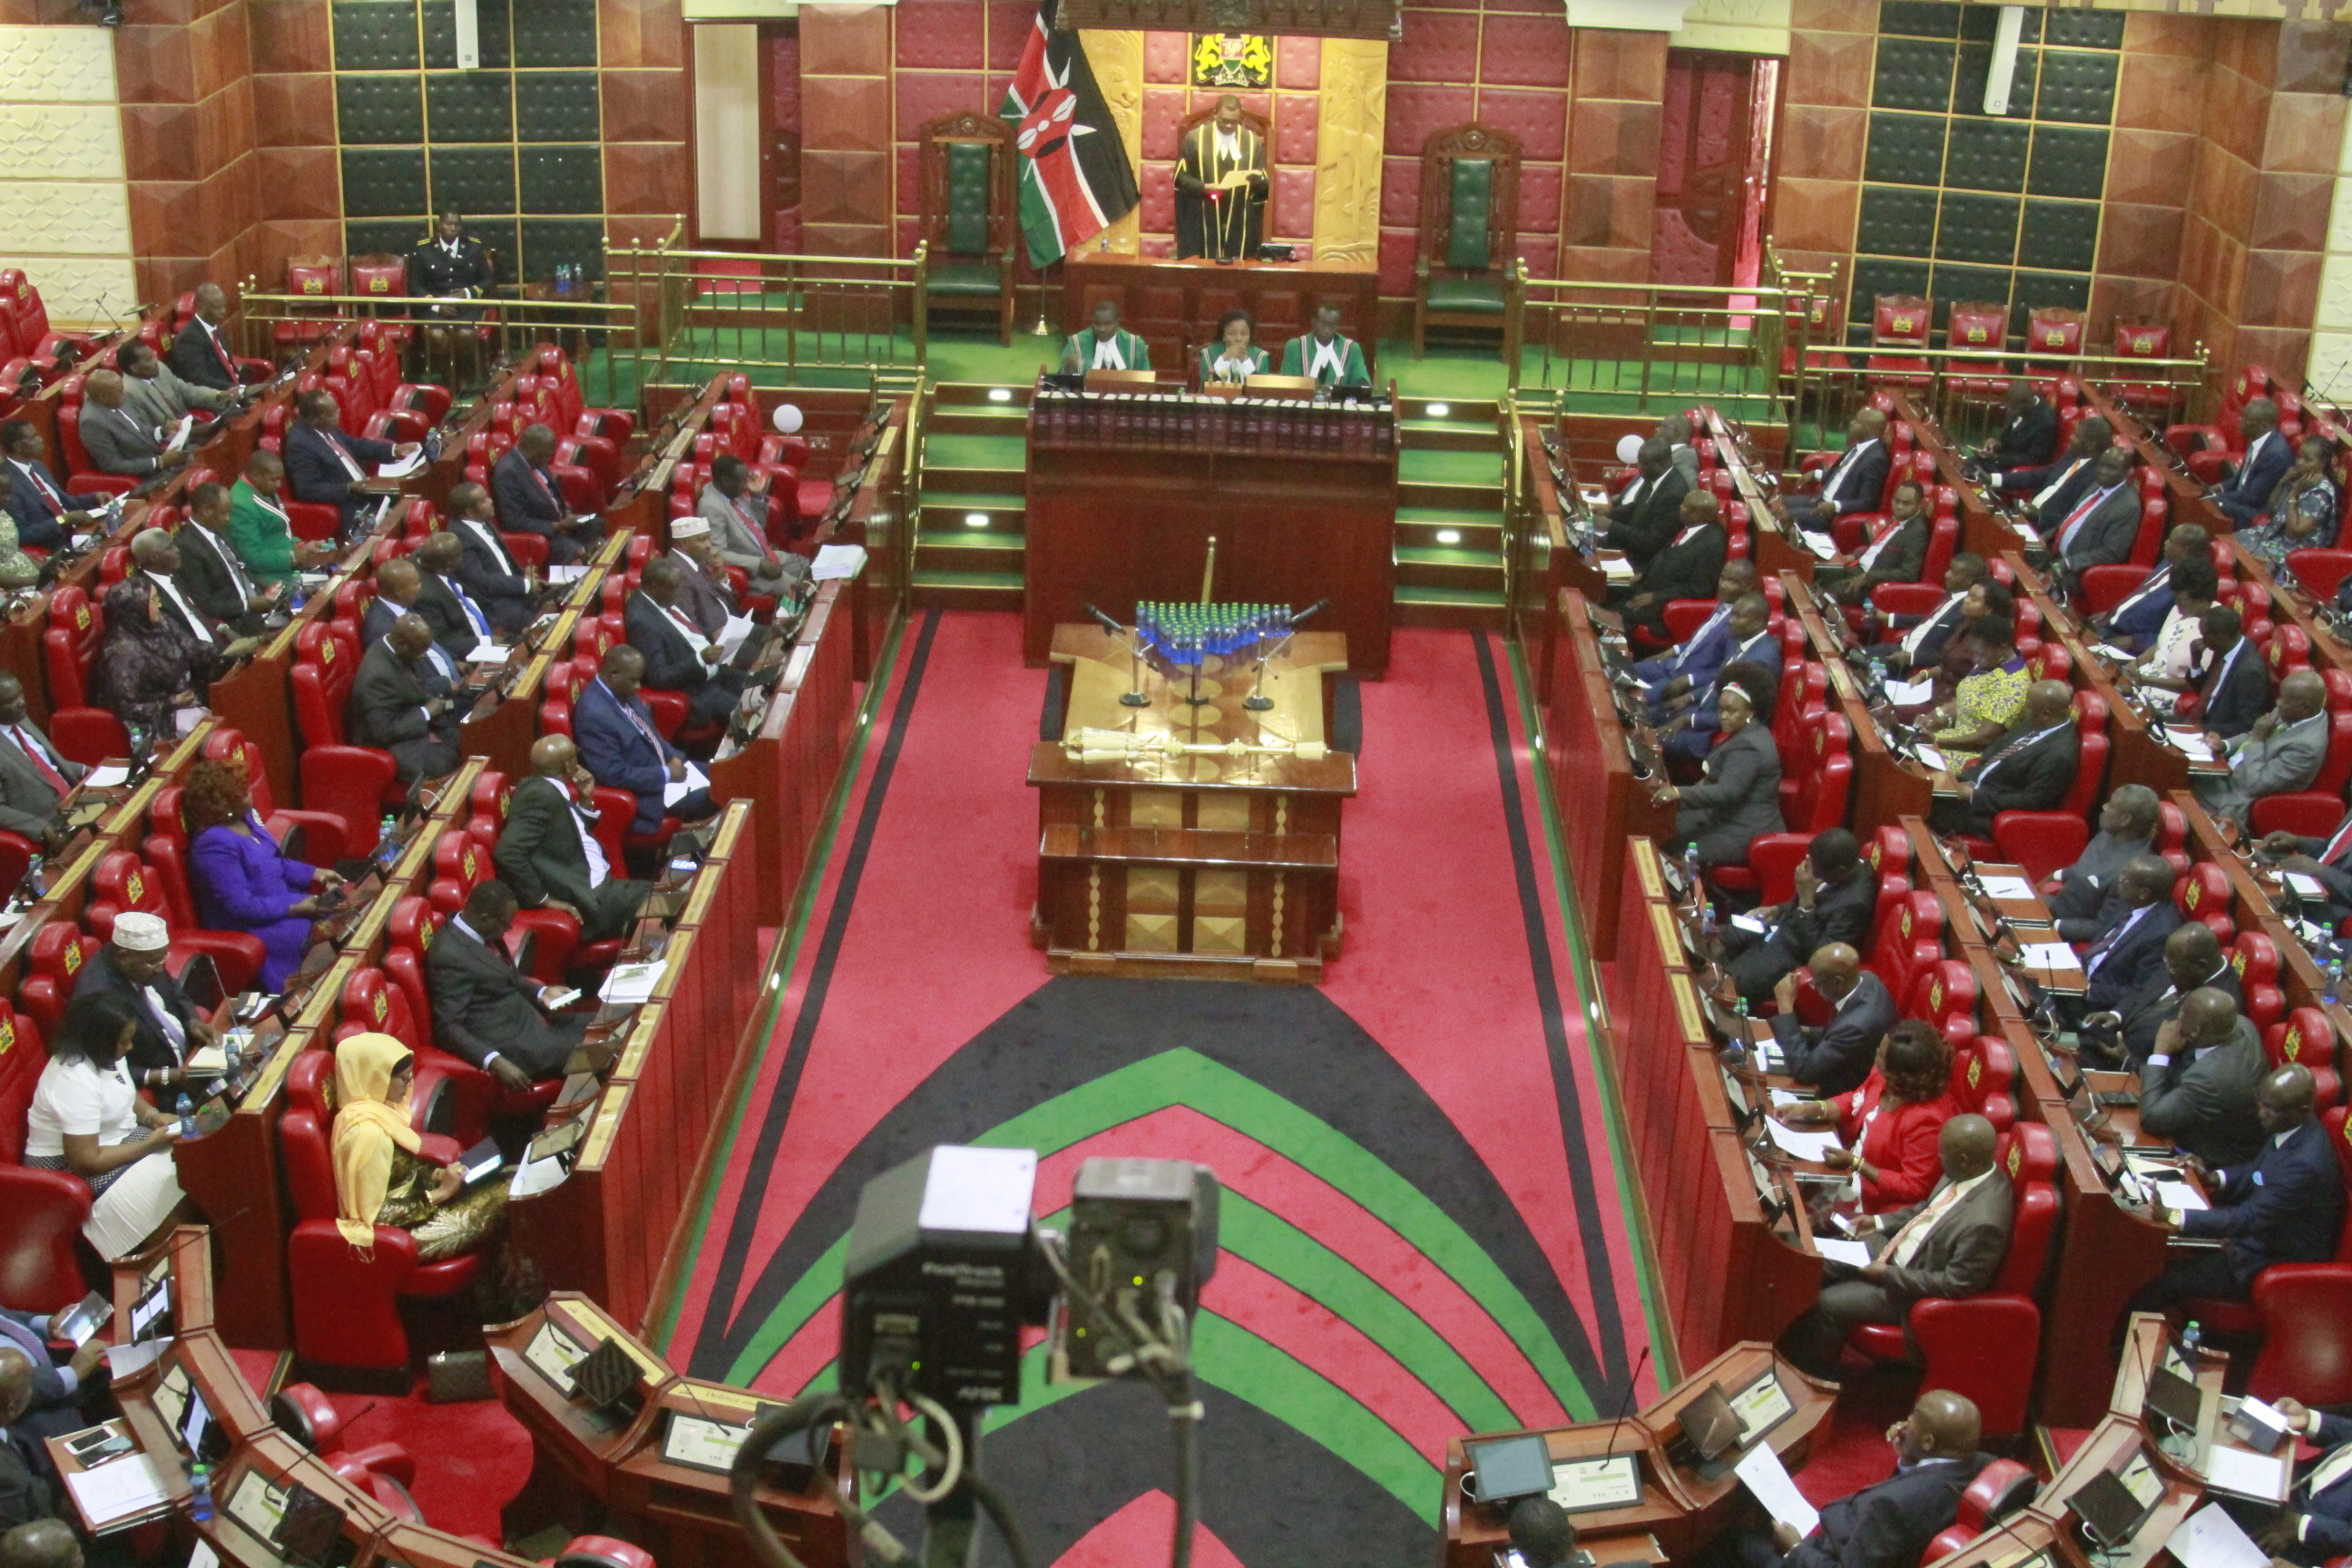 Parliament resumes after long recess